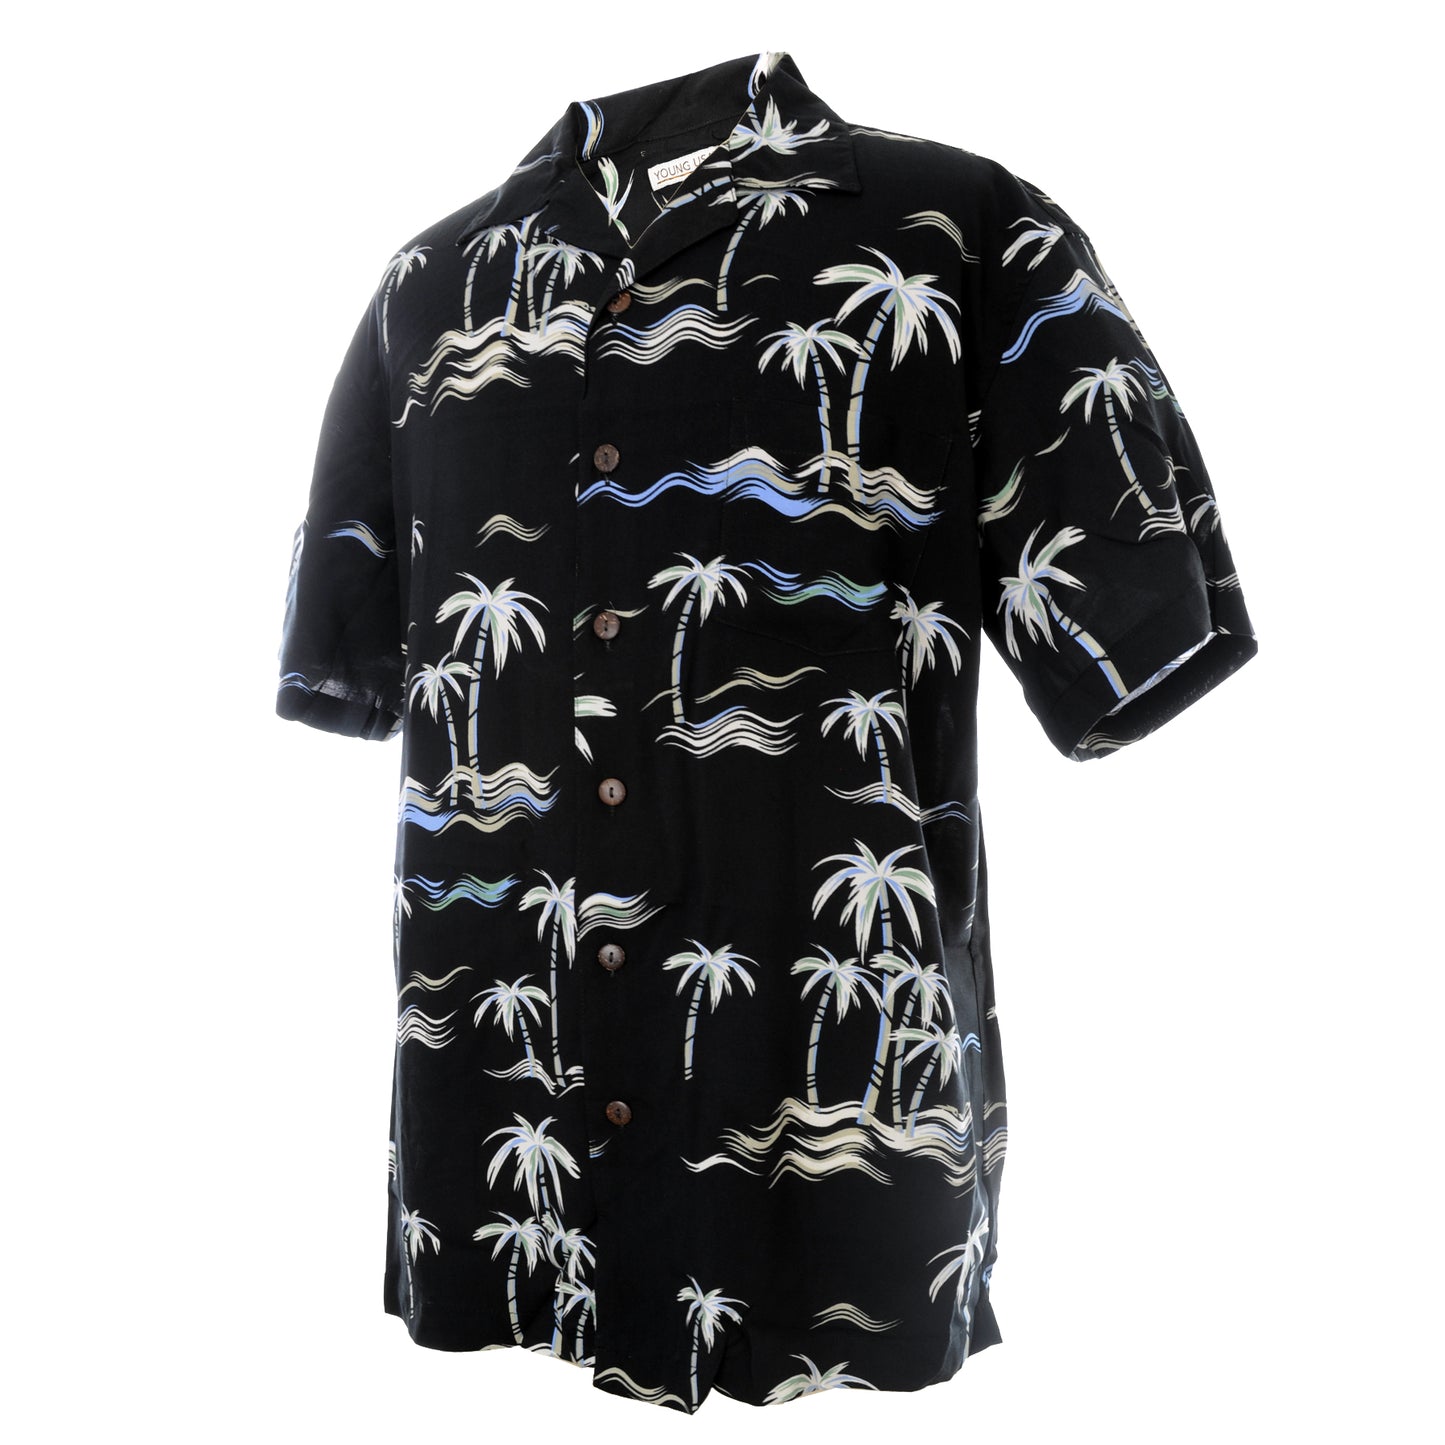 Men's Hawaiian Shirt, Palm Trees and Waves